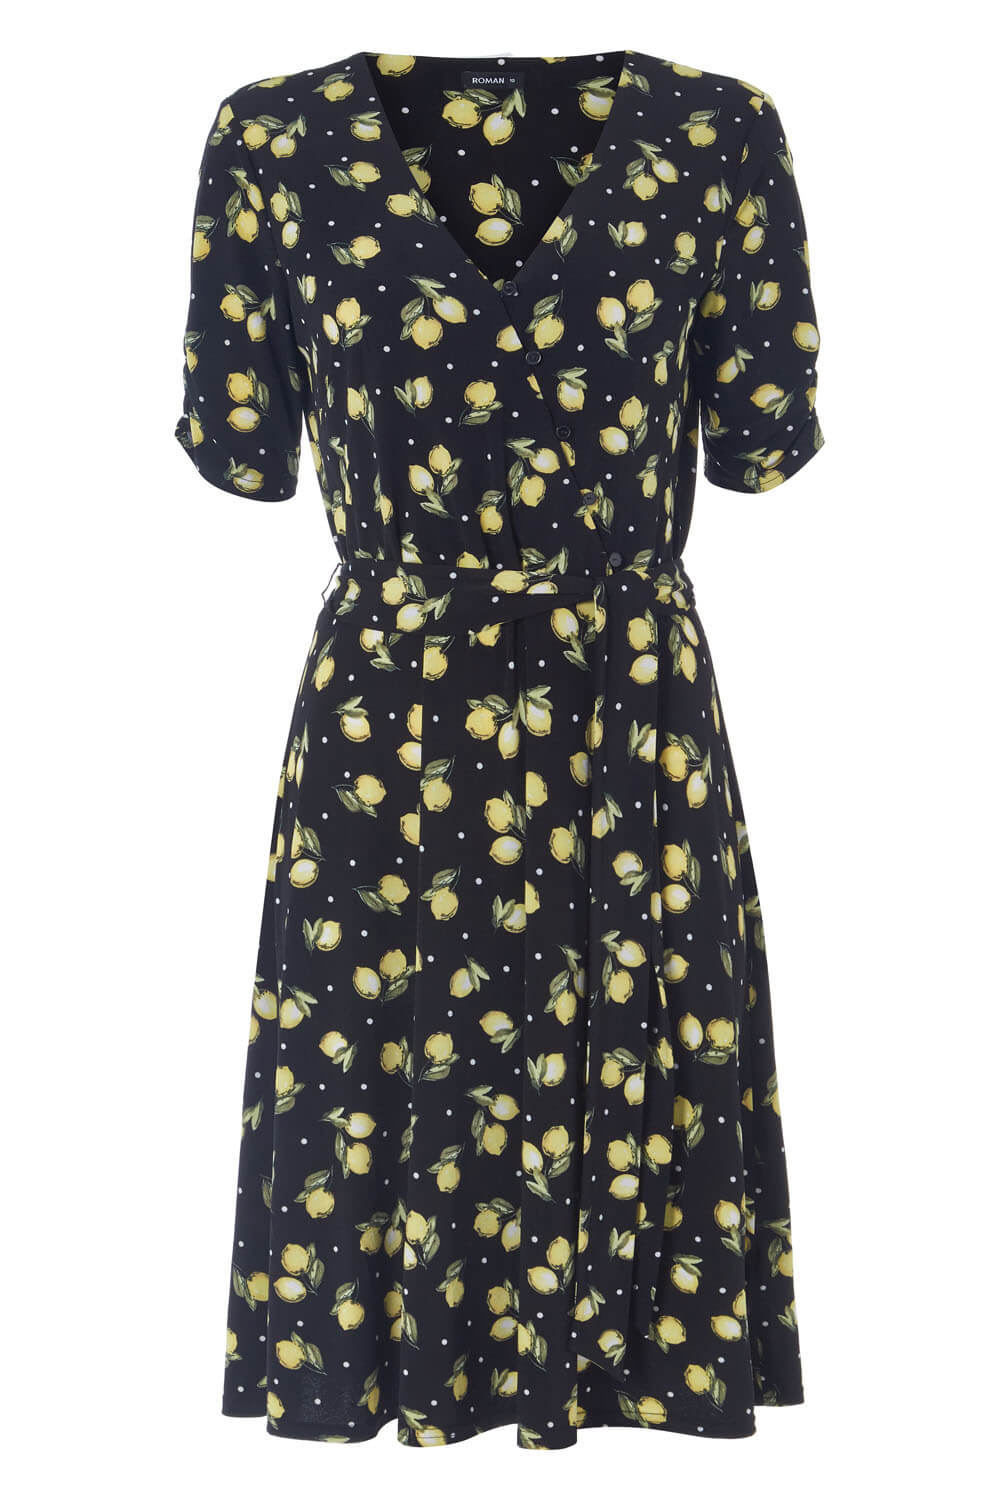 Black Lemon Print Wrap Dress, Image 5 of 5